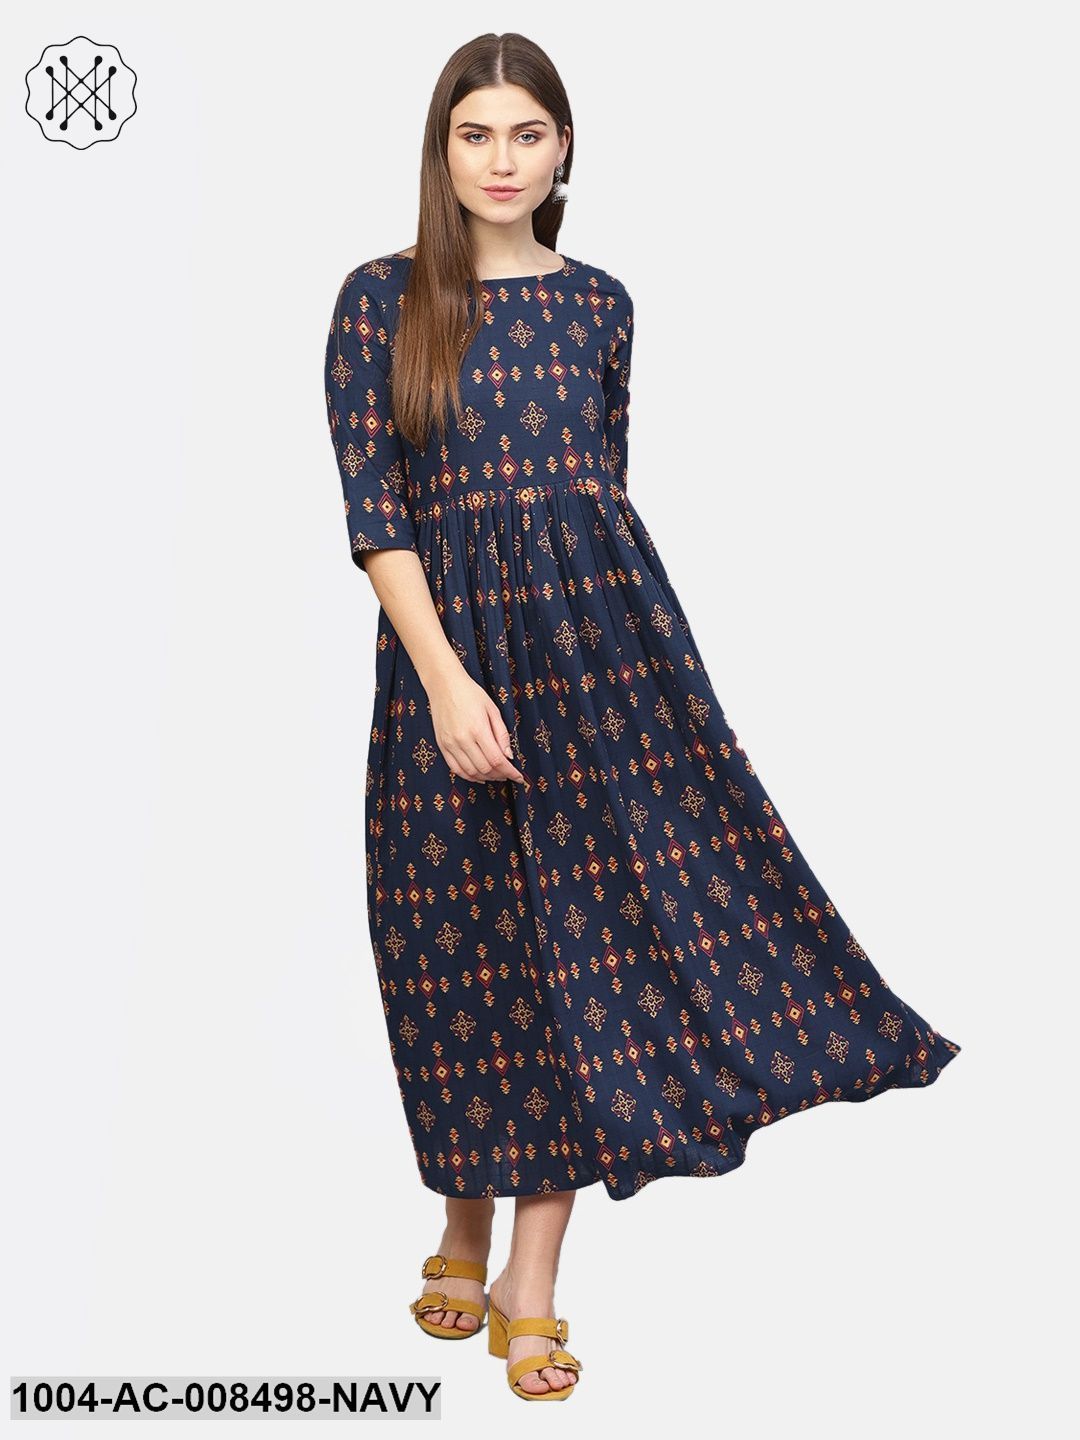 navy blue cotton maxi dress